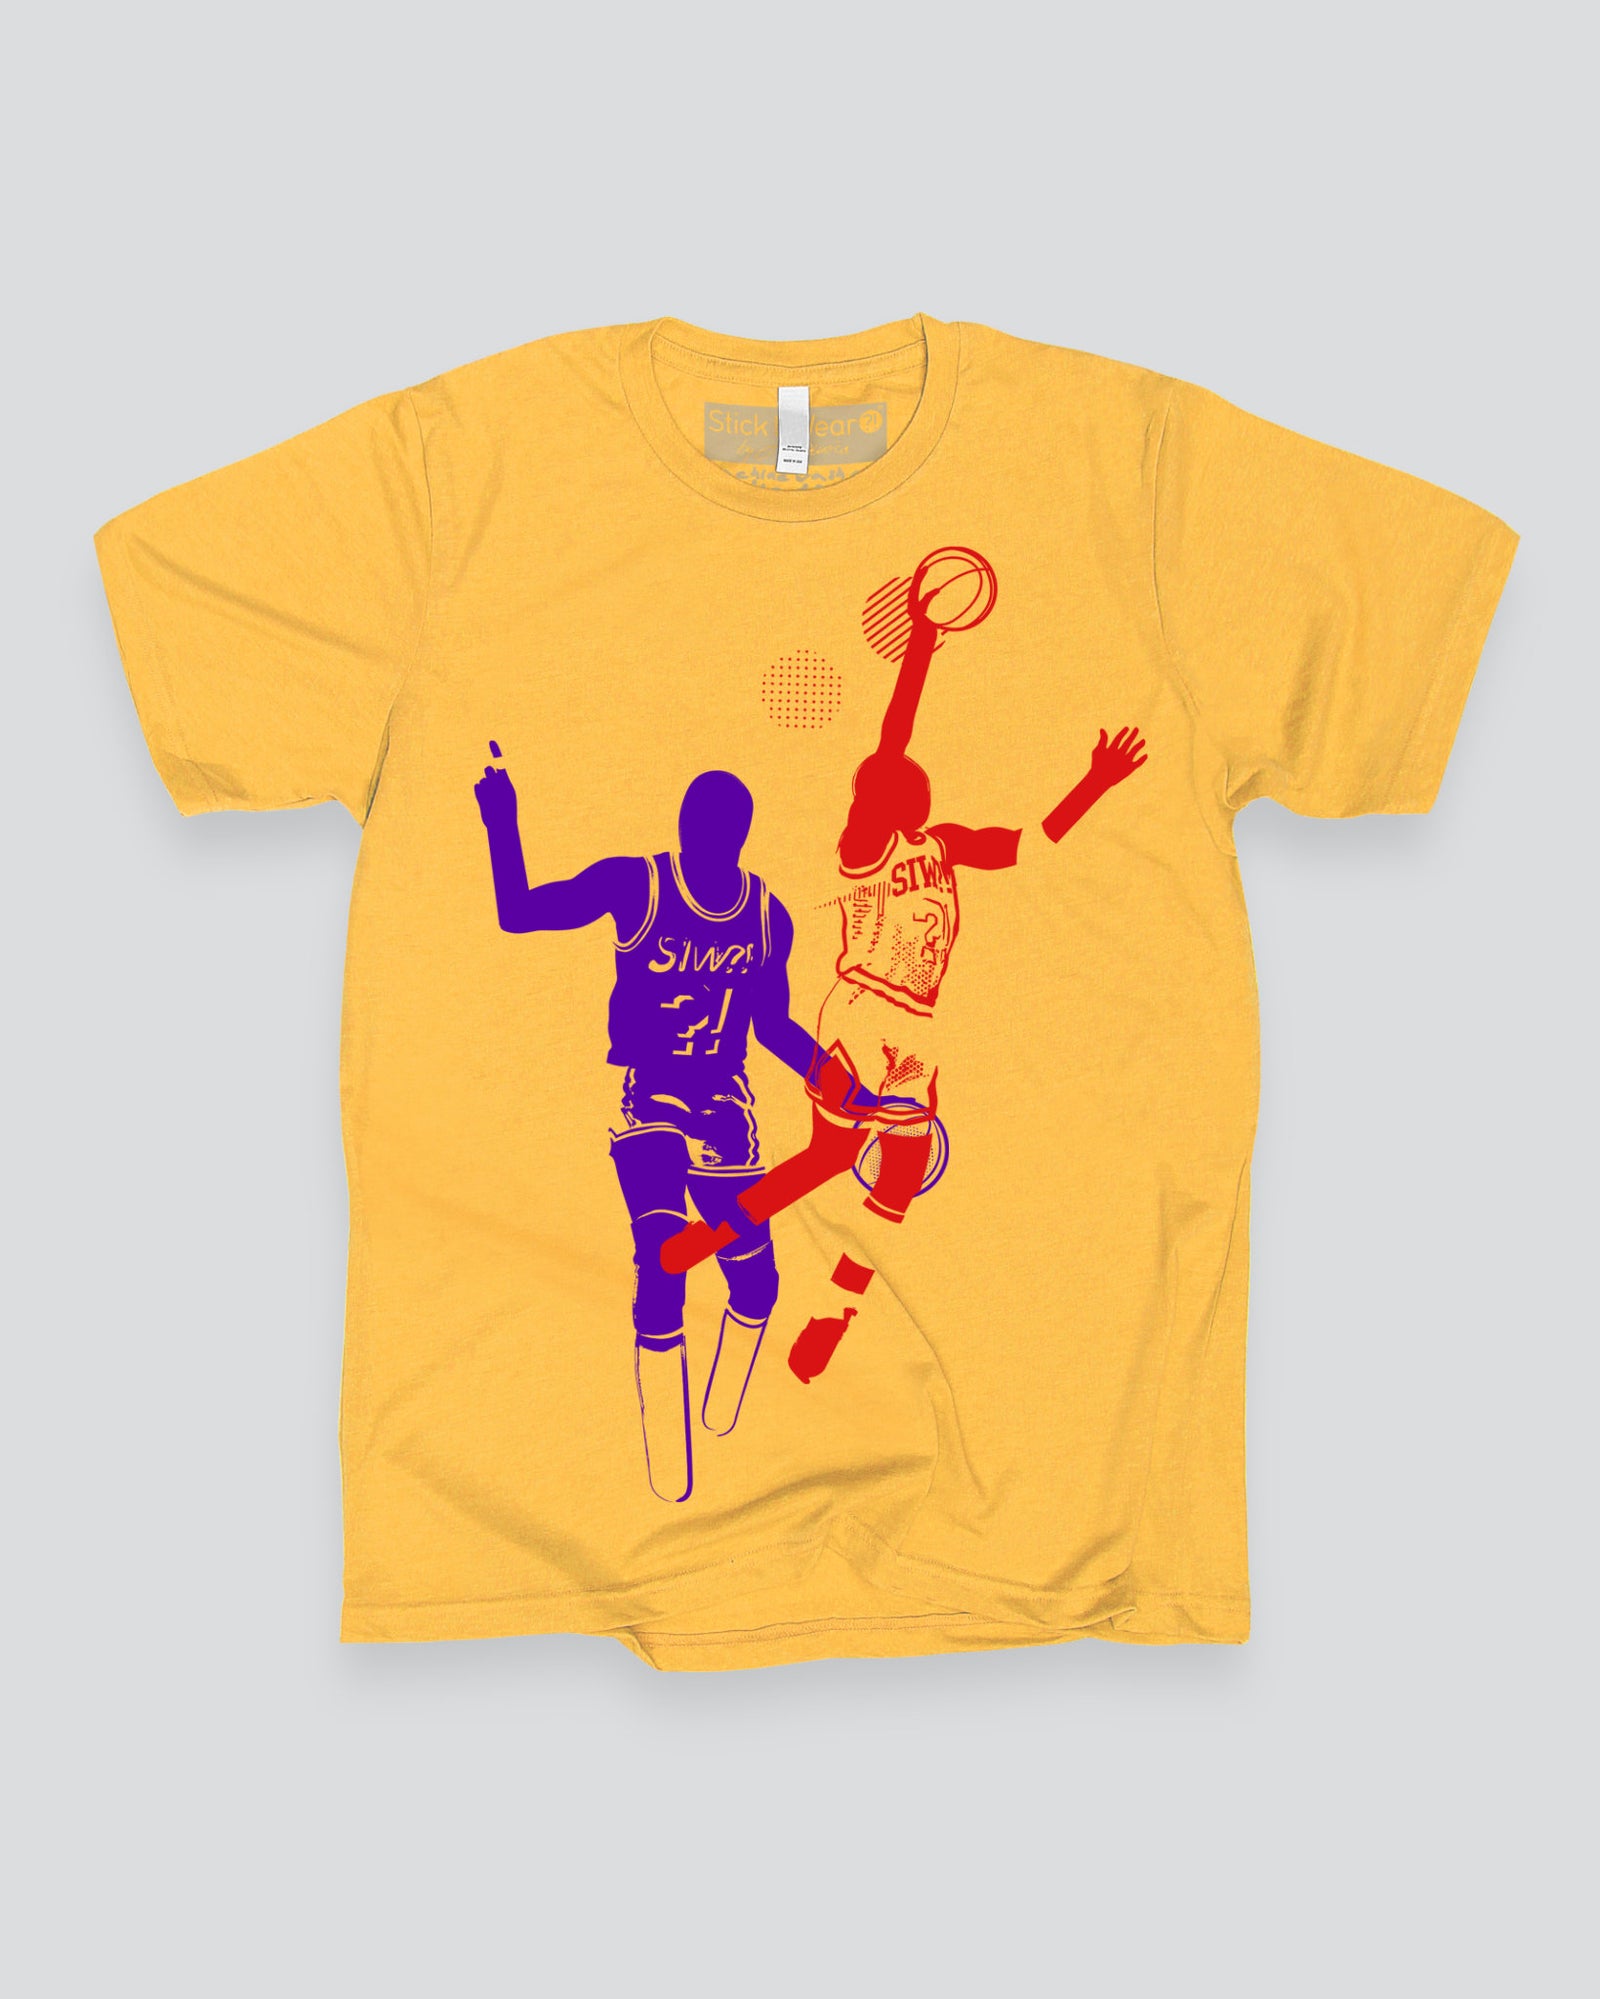 Basketball Sports Fashion Apparel | Stick It Wear?!